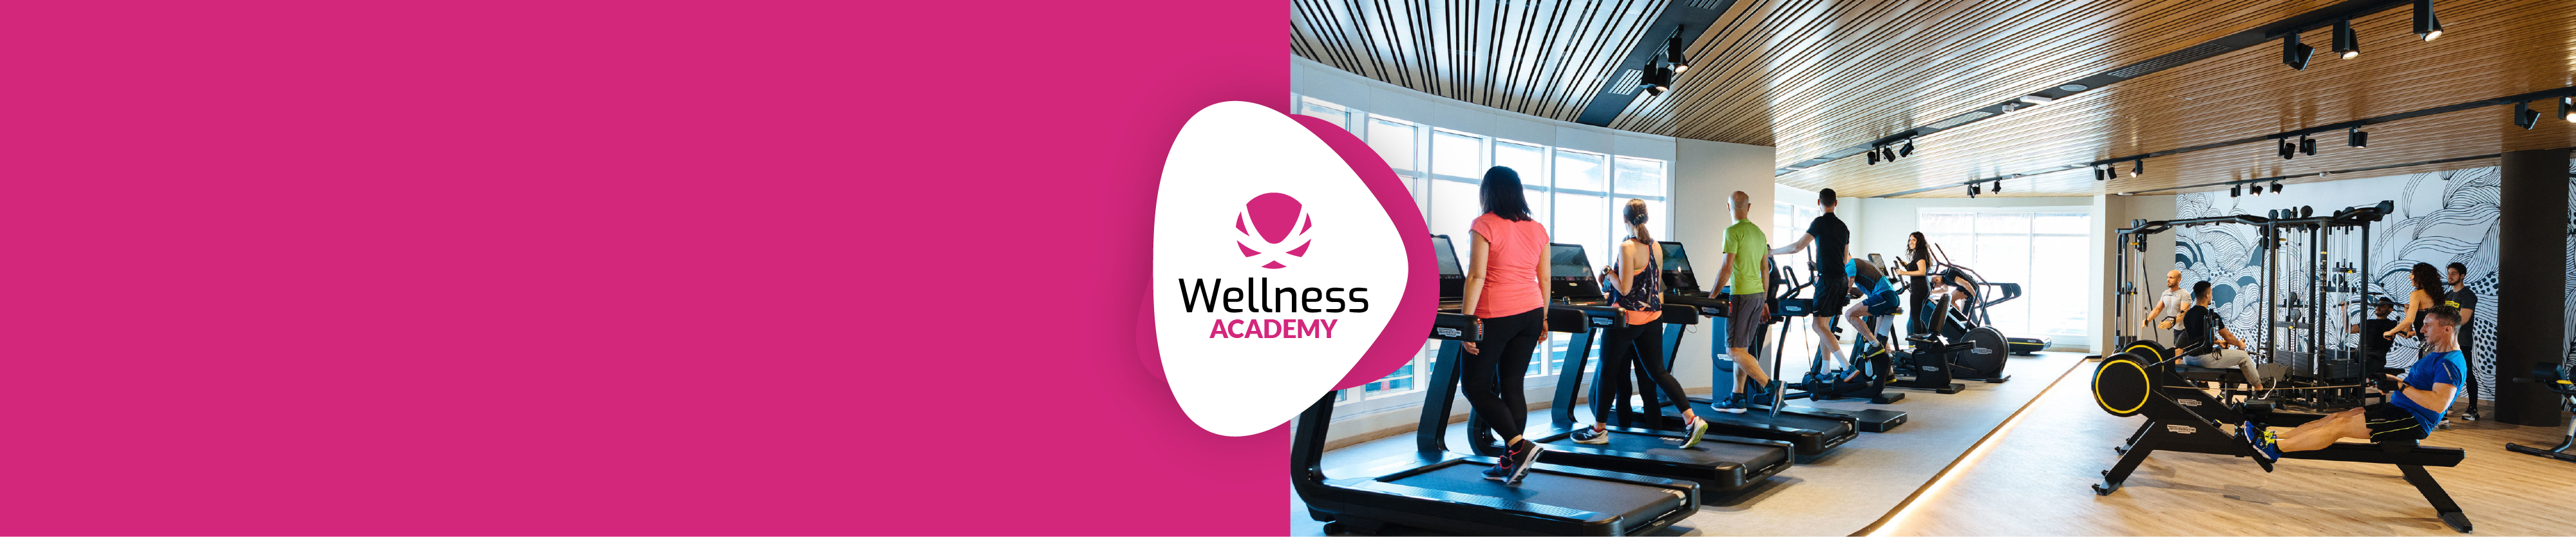 Slider - Zanardelli Wellness Academy